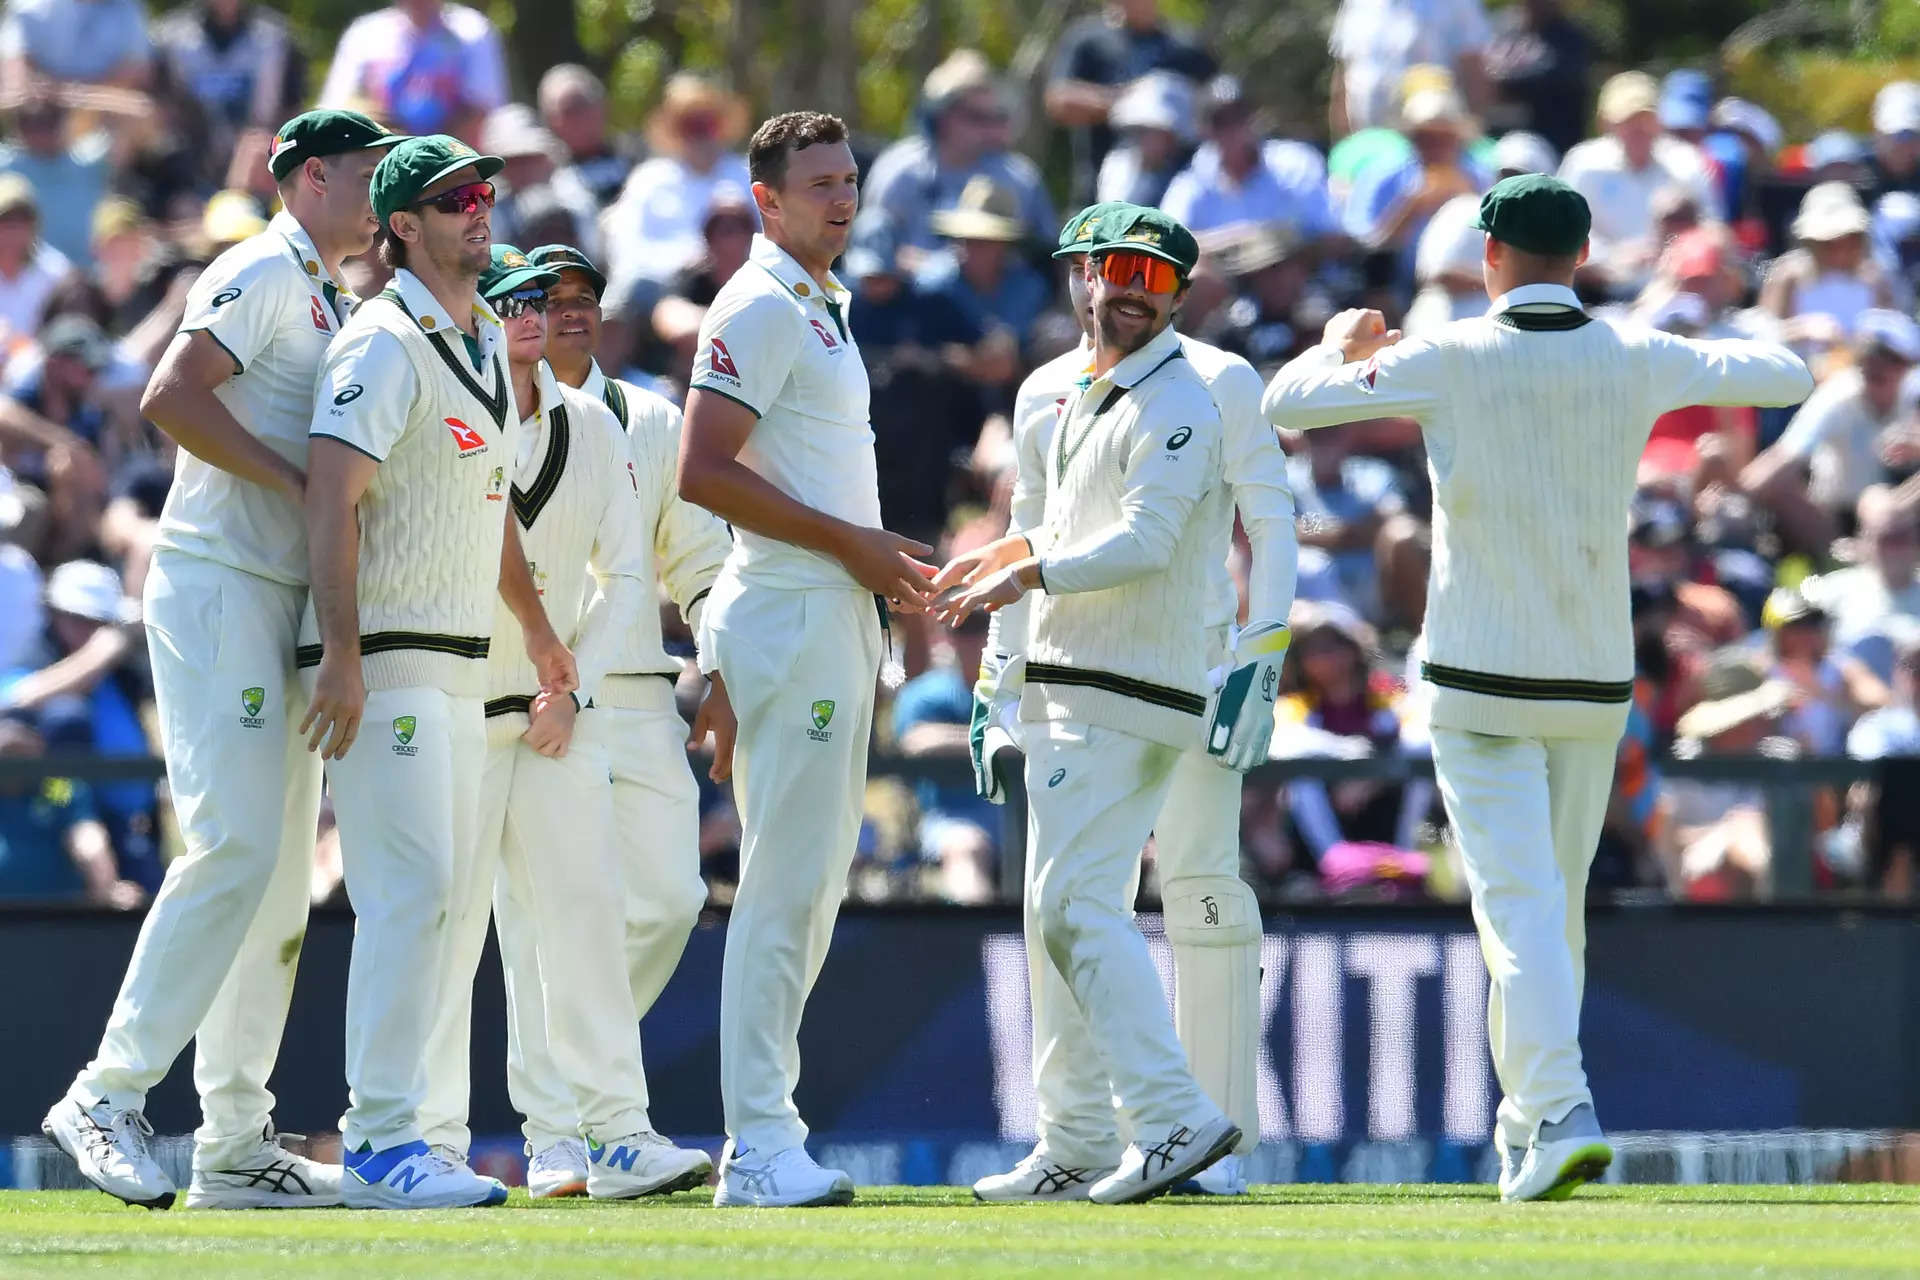 2nd Test: Hazlewood propels Australia on eventful opening day